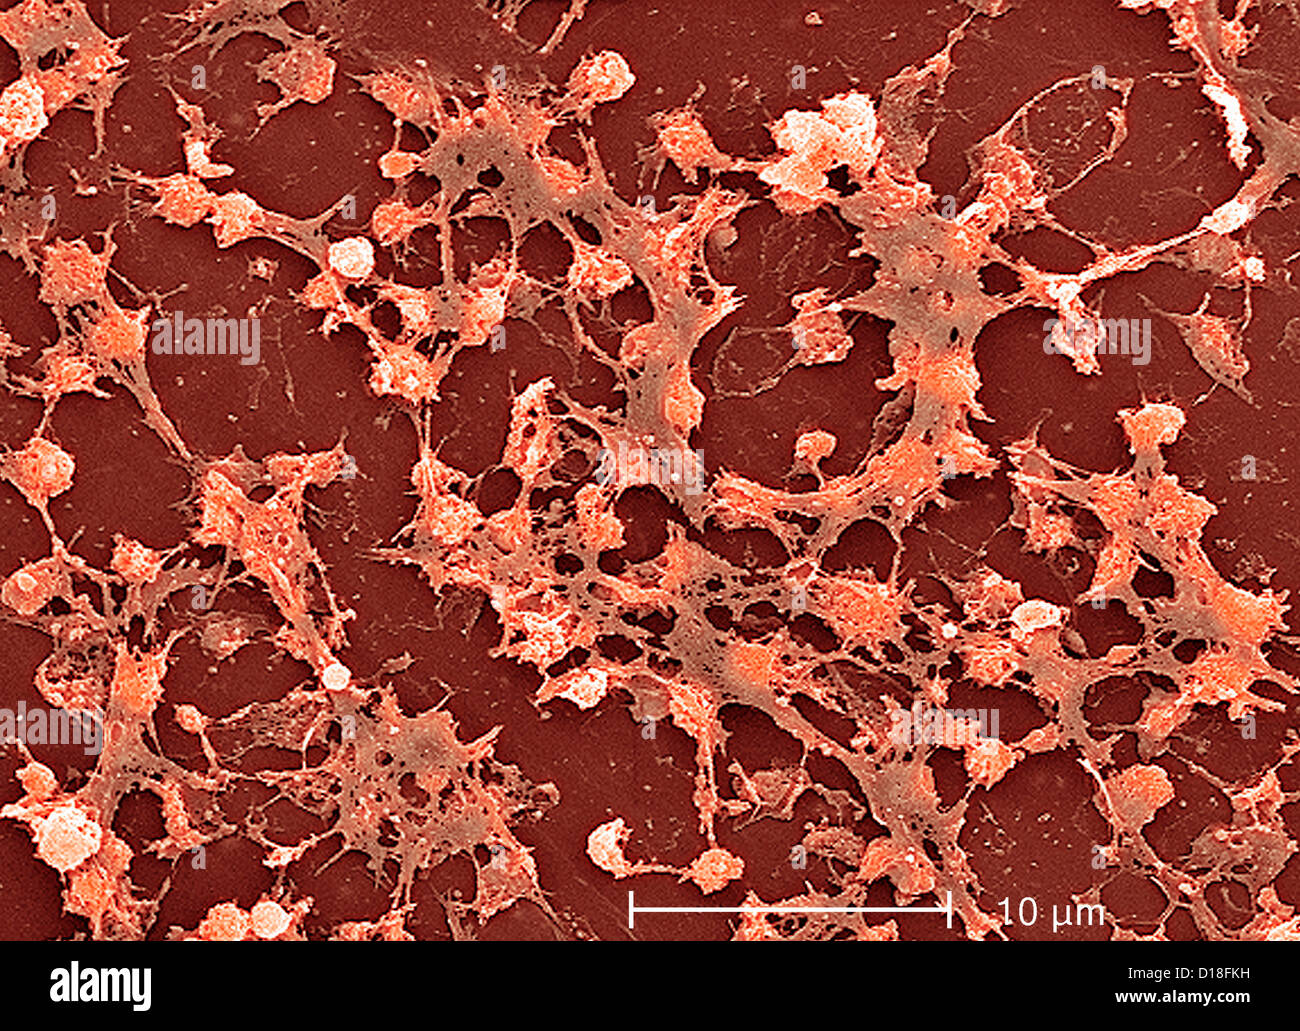 Micrografia elettronica di Staphylococcus aureus Foto Stock